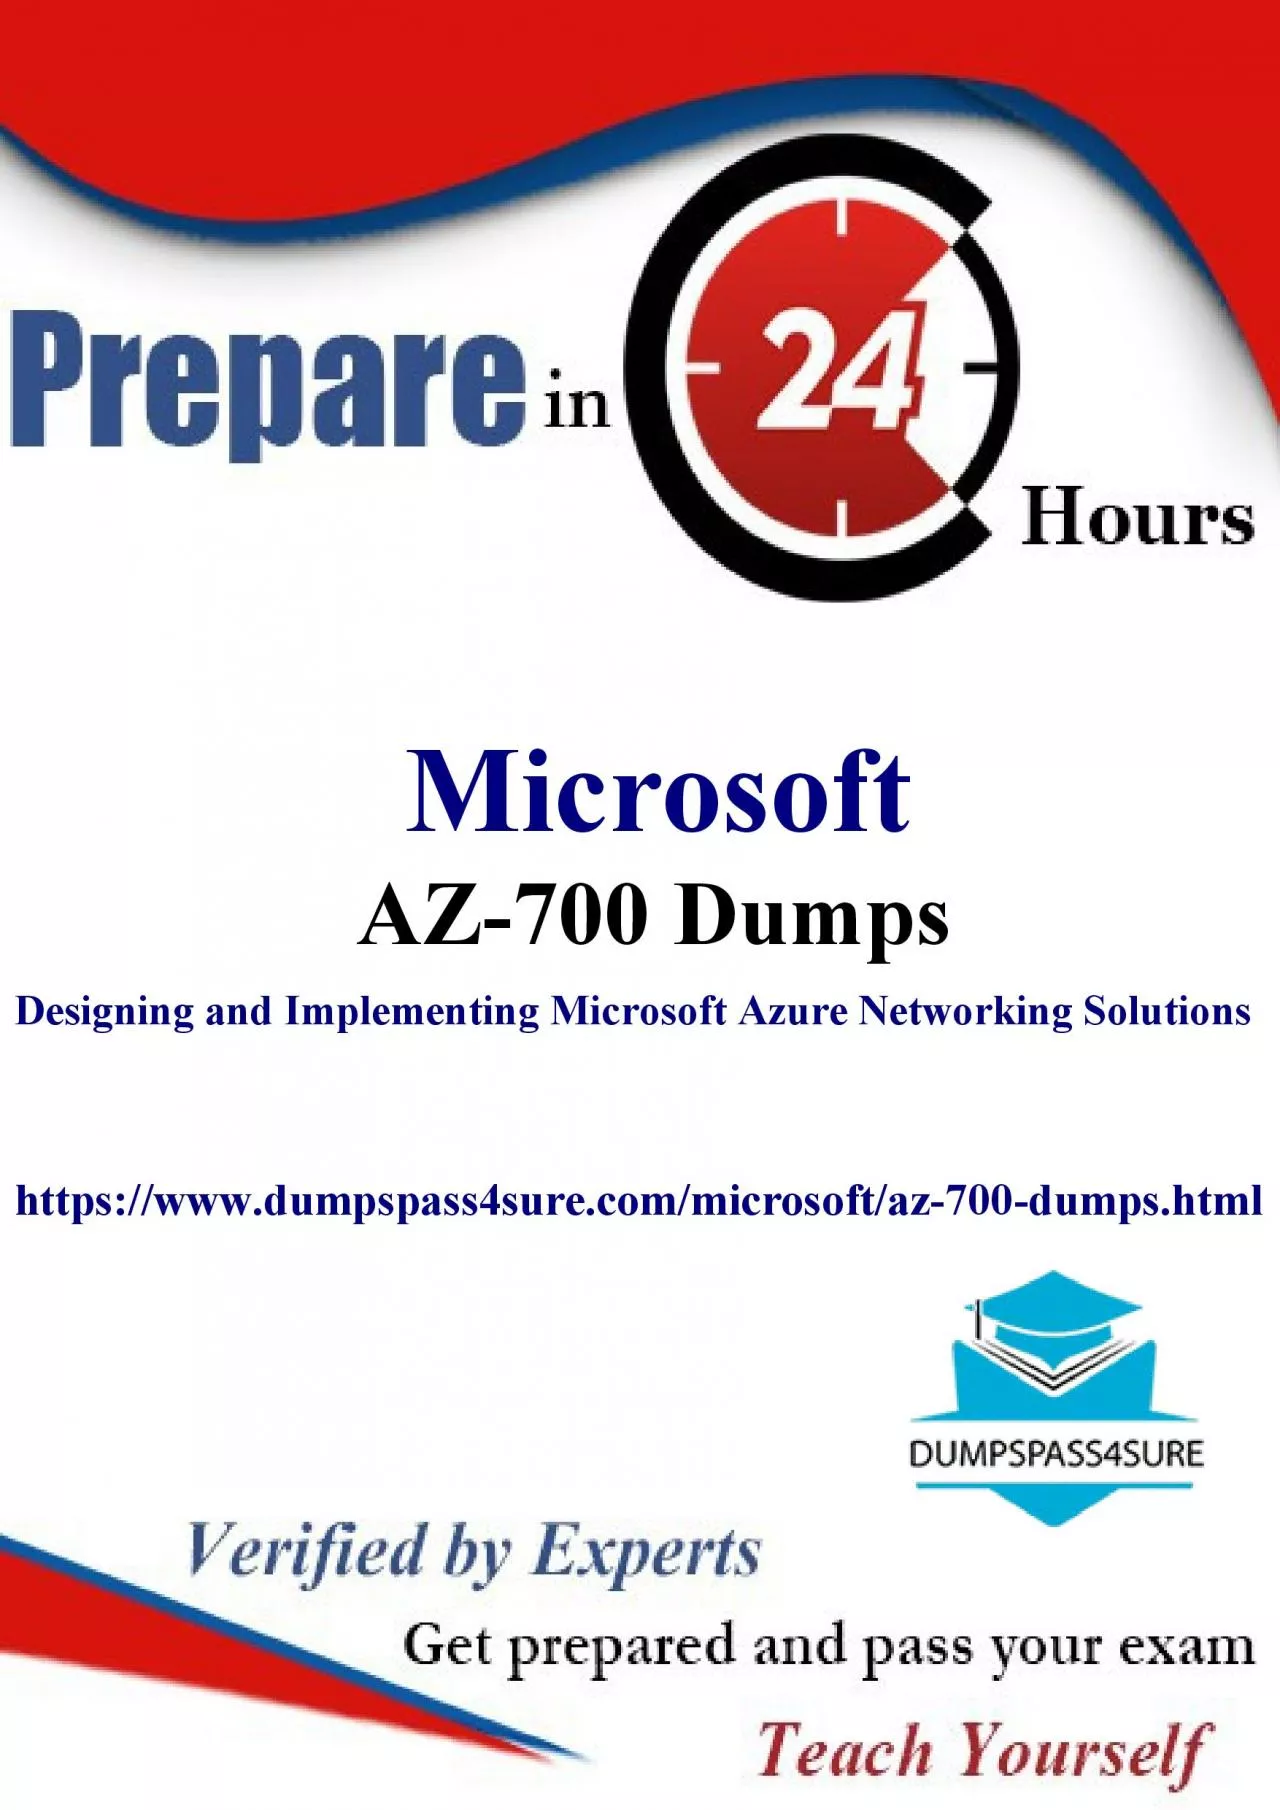 Gift of Wisdom: Unlock Azure AZ-700 Dumps PDF at 20% Off – DumpsPass4Sure Christmas